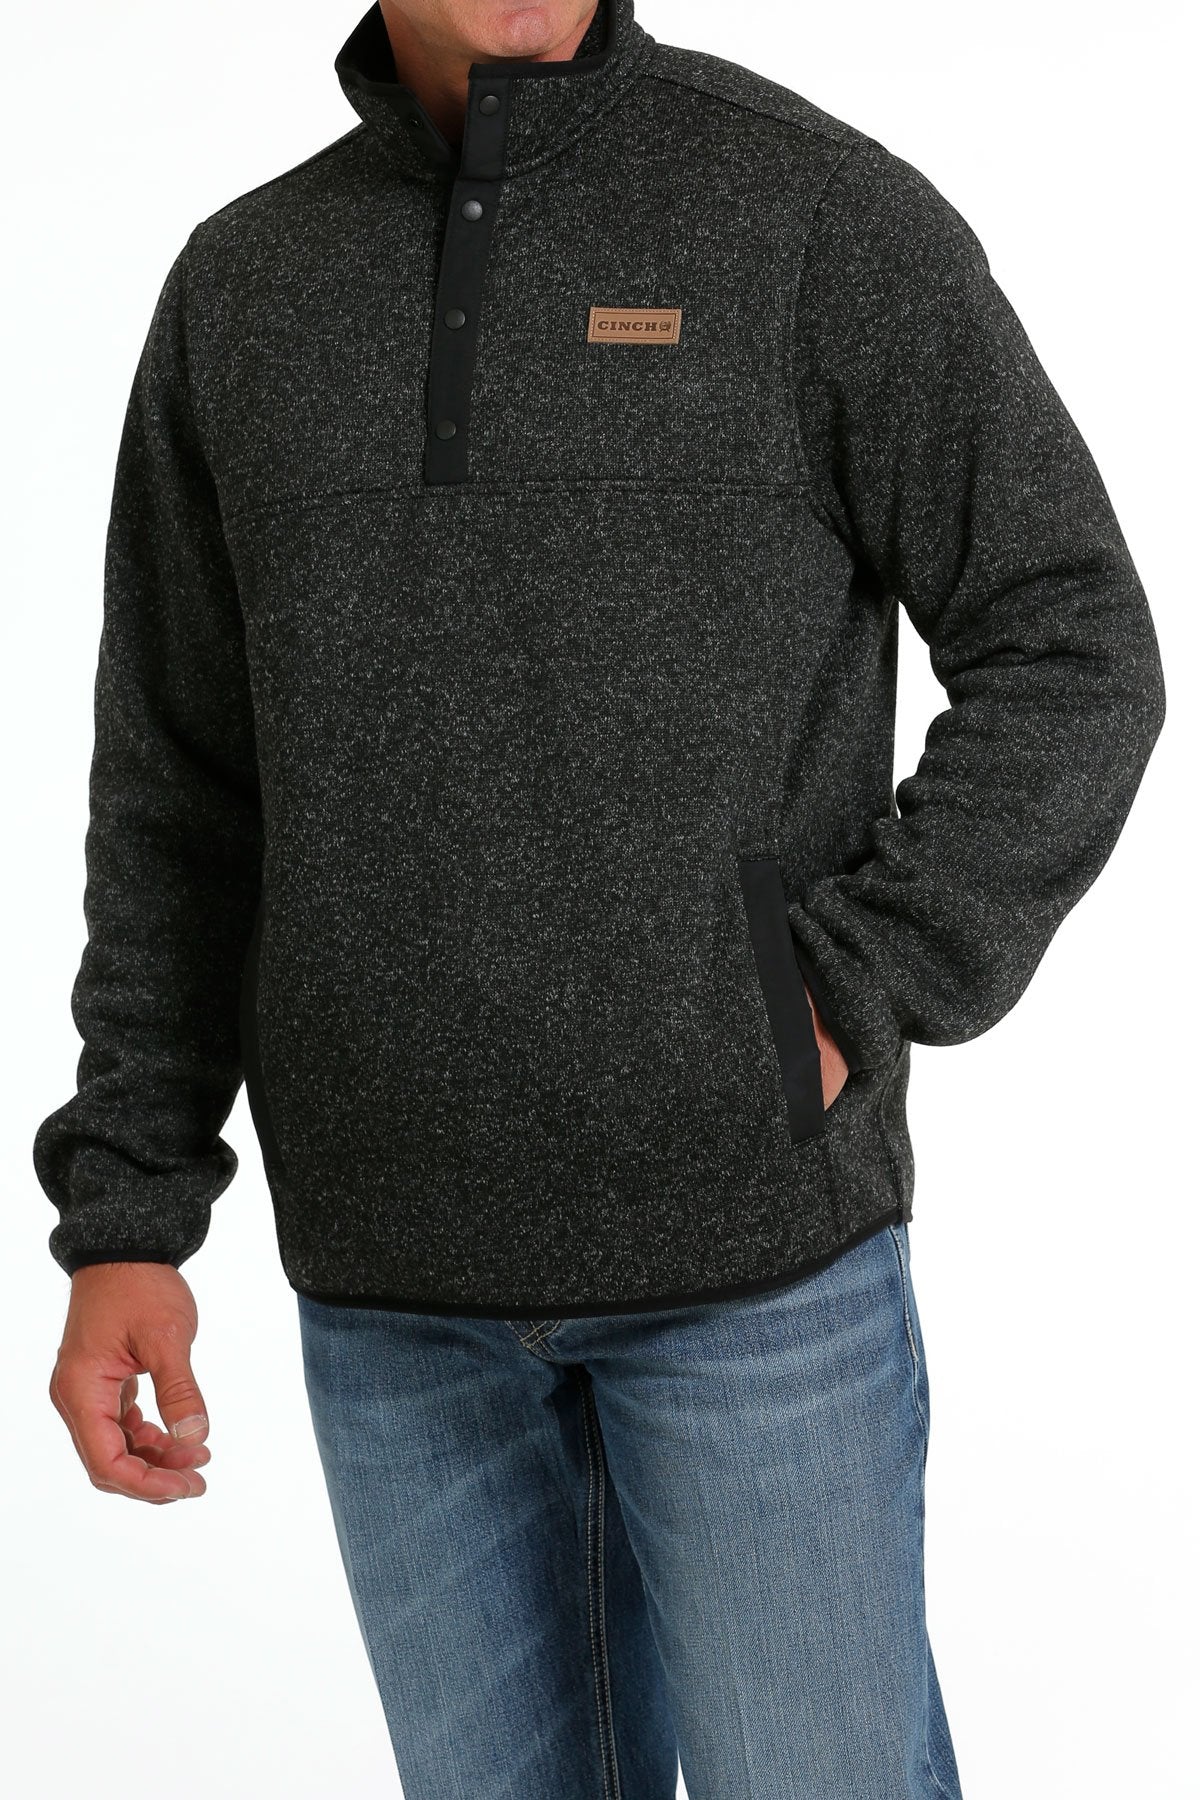 Cinch - Men's 1/4 Snap Pullover Sweater